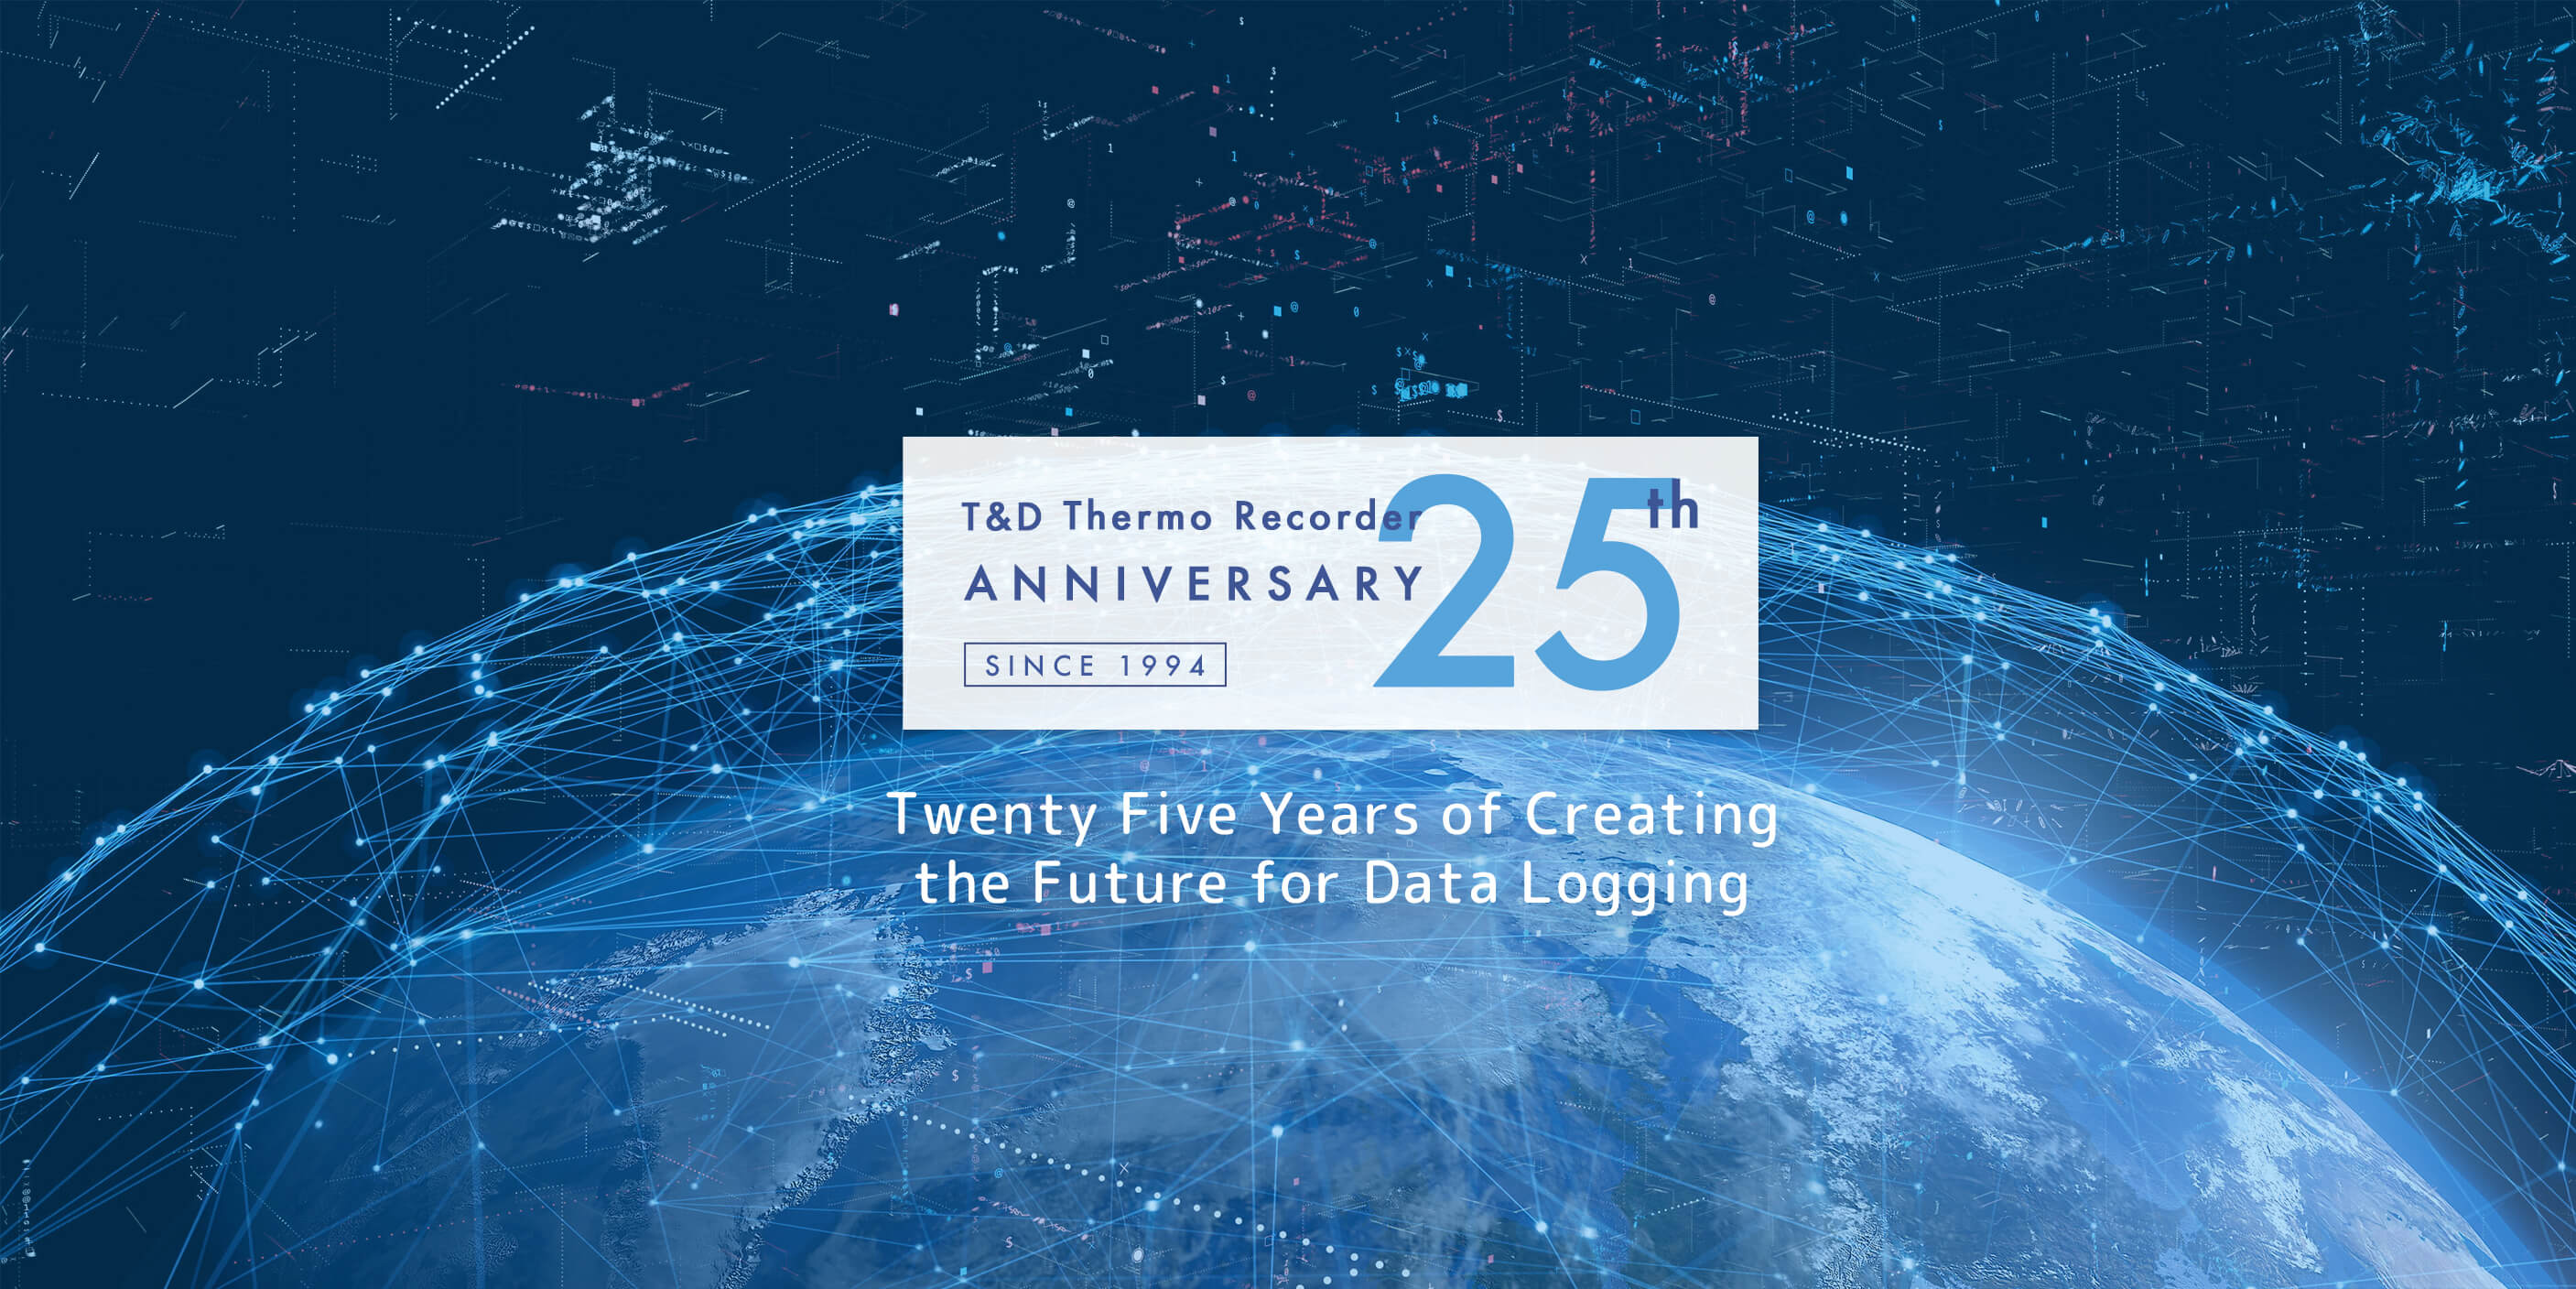 T&D Thermo Recorder Anniversary 25th